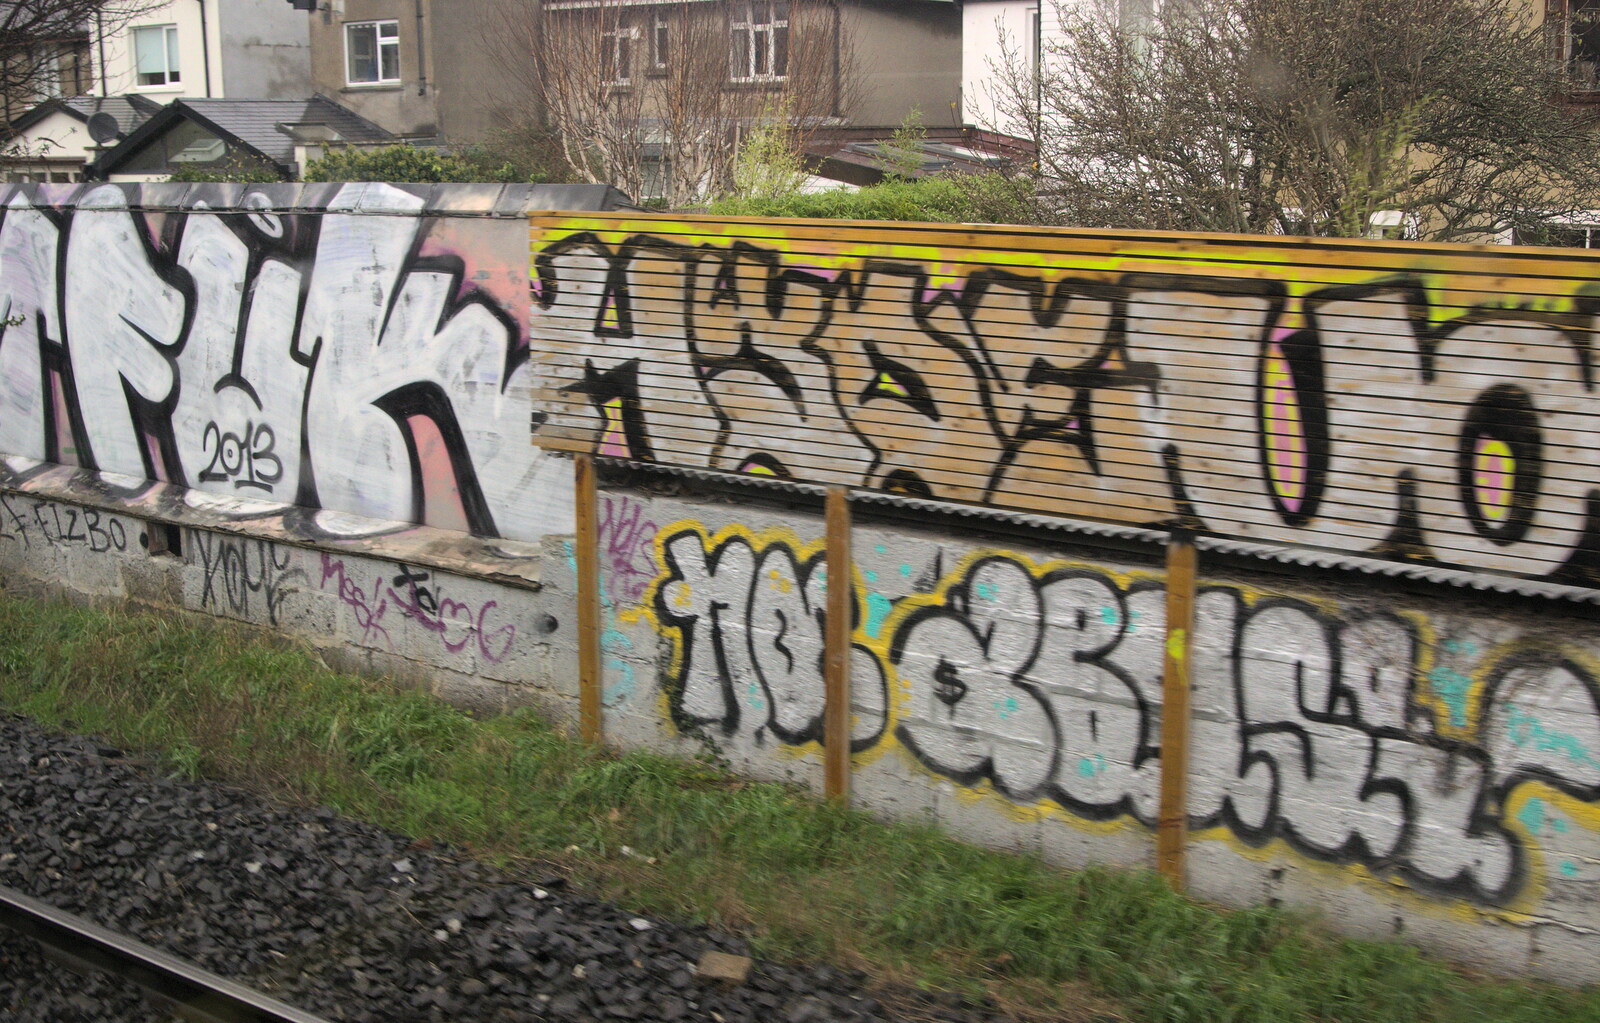 Trackside graffiti as we head into Dublin from Christmas Eve in Dublin and Blackrock, Ireland - 24th December 2015